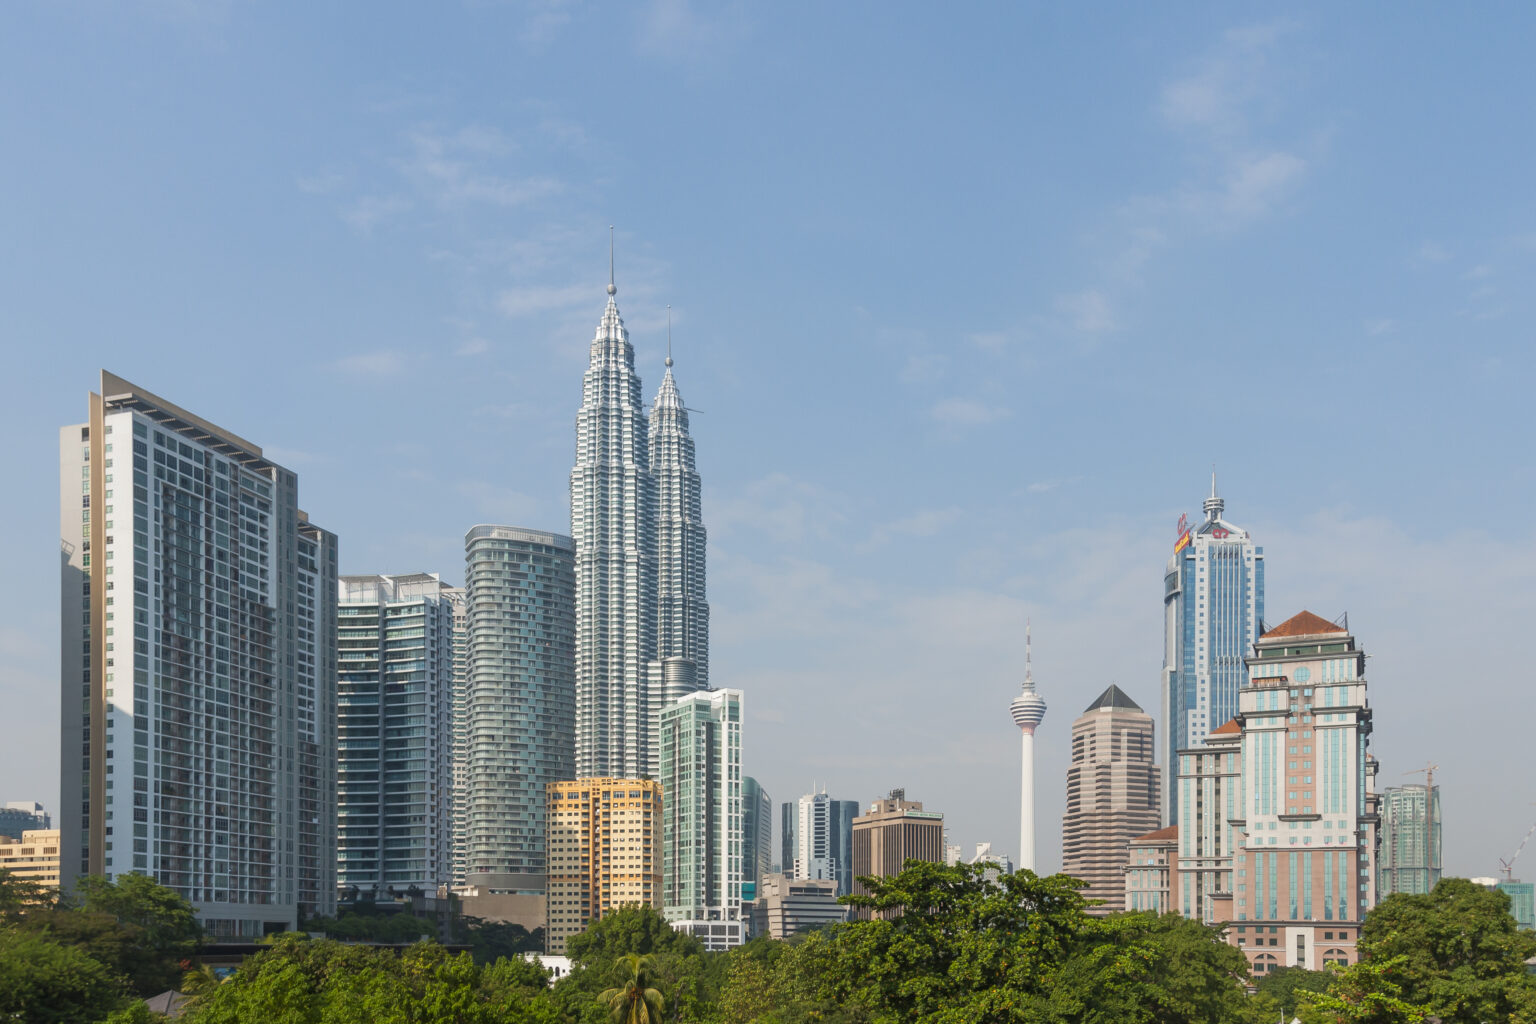 Malaysia on the Digital Rise